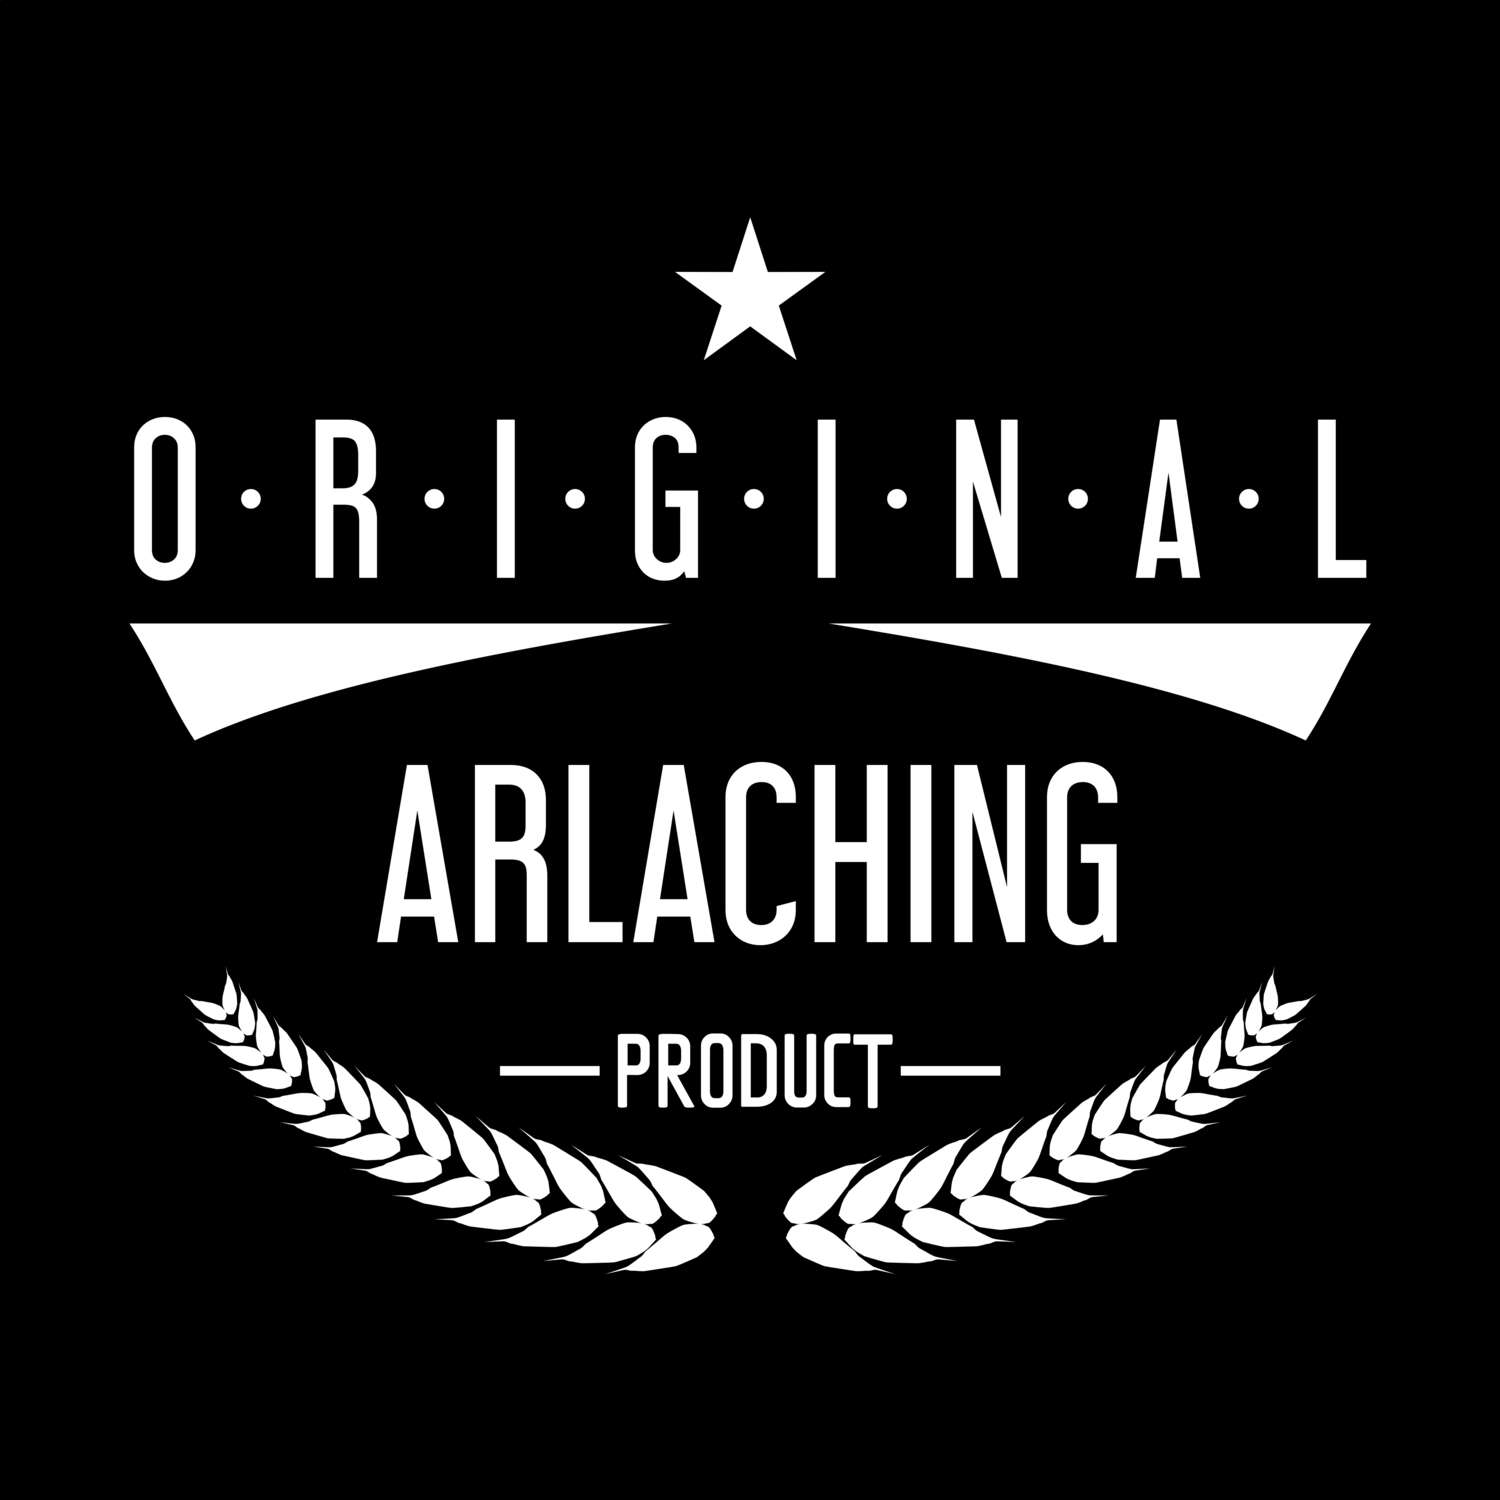 Arlaching T-Shirt »Original Product«